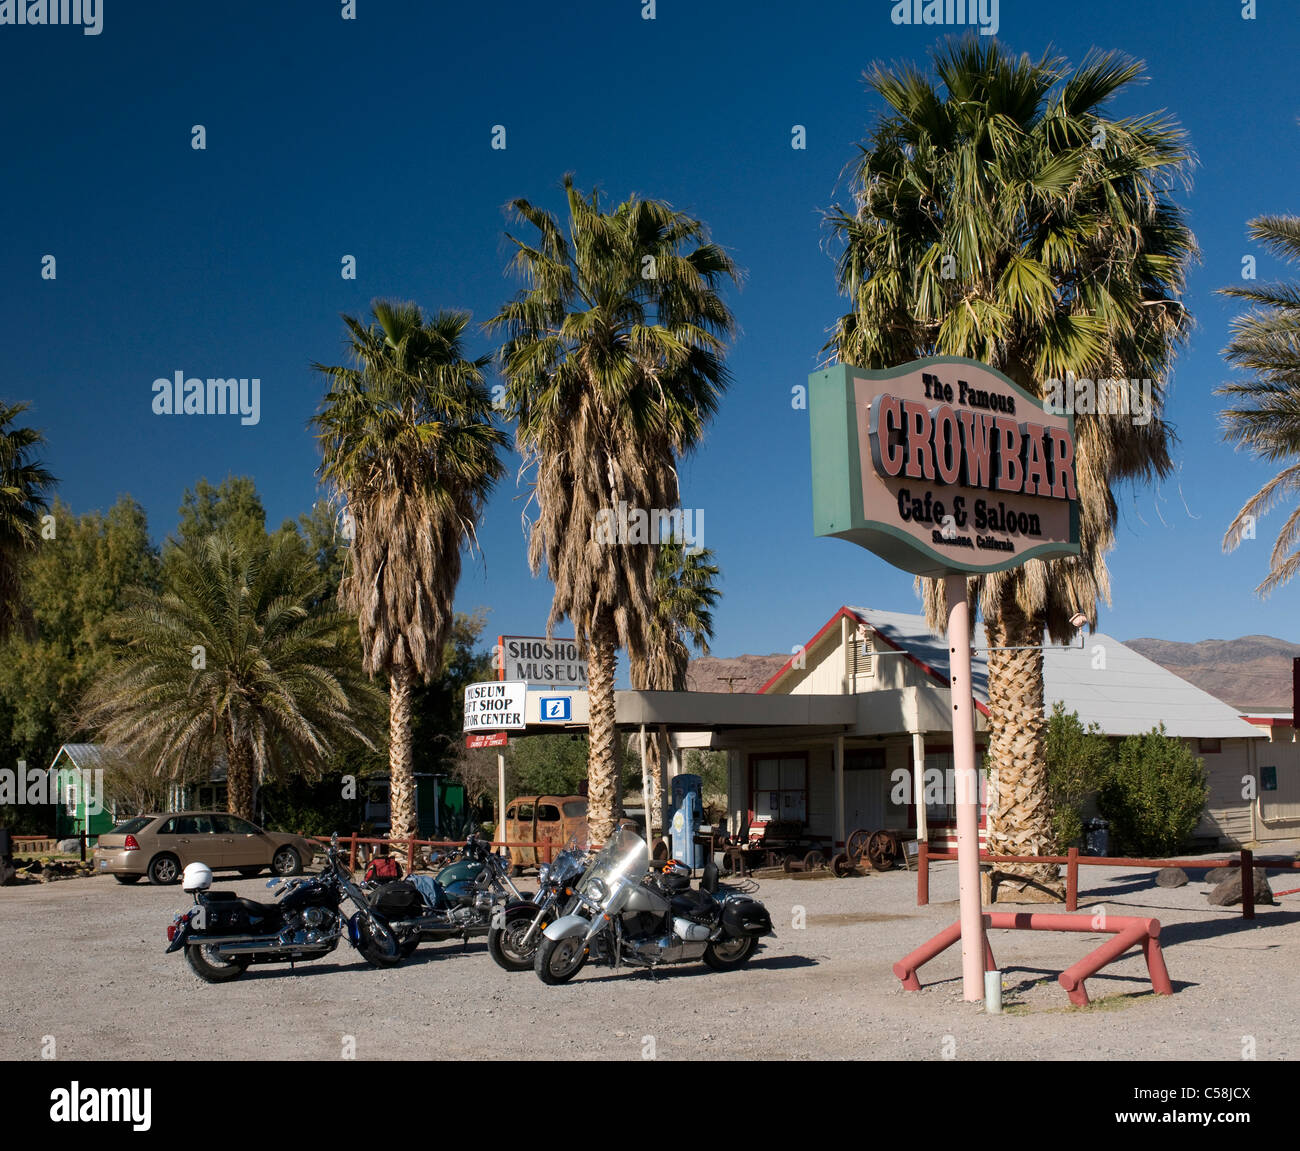 Crowbar Cafe, Saloon, Shoshone, California, USA, United States, America, palm trees, motor bikes Stock Photo